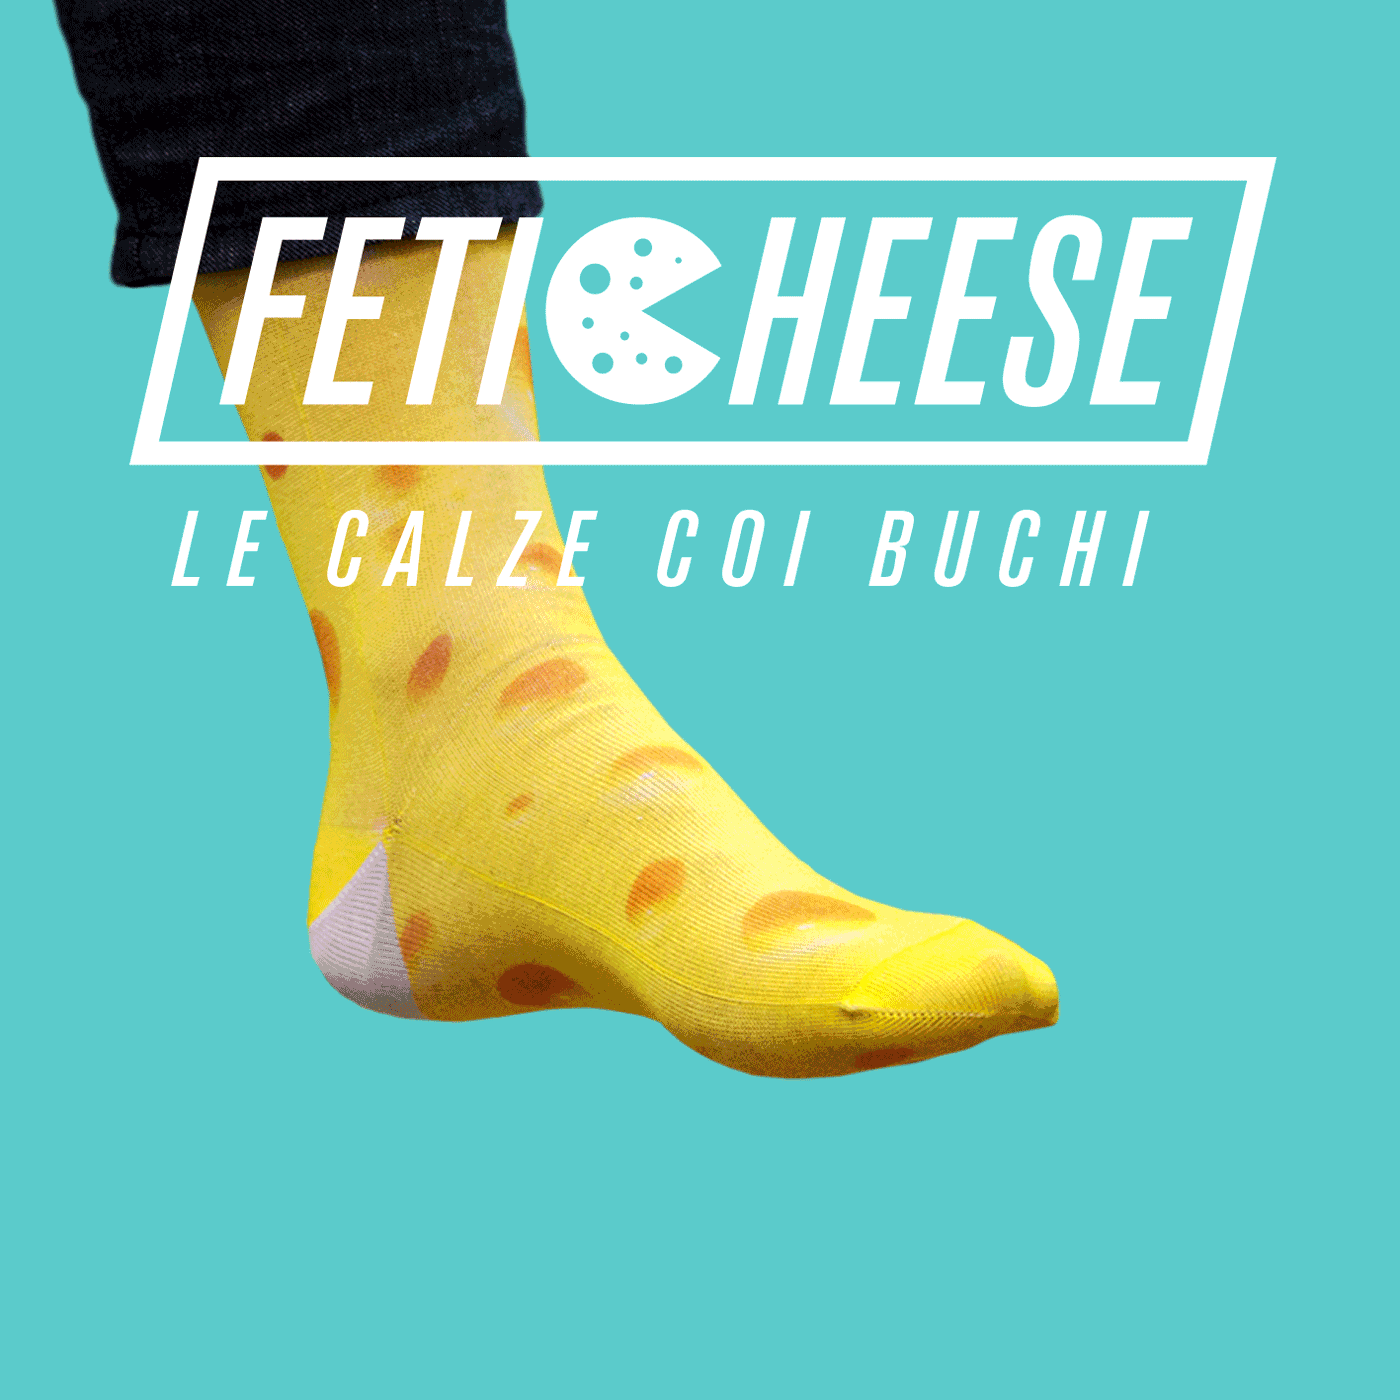 calze feticheese formaggio socks texture CHEESE SMELL design Fashion  funny ideas odore